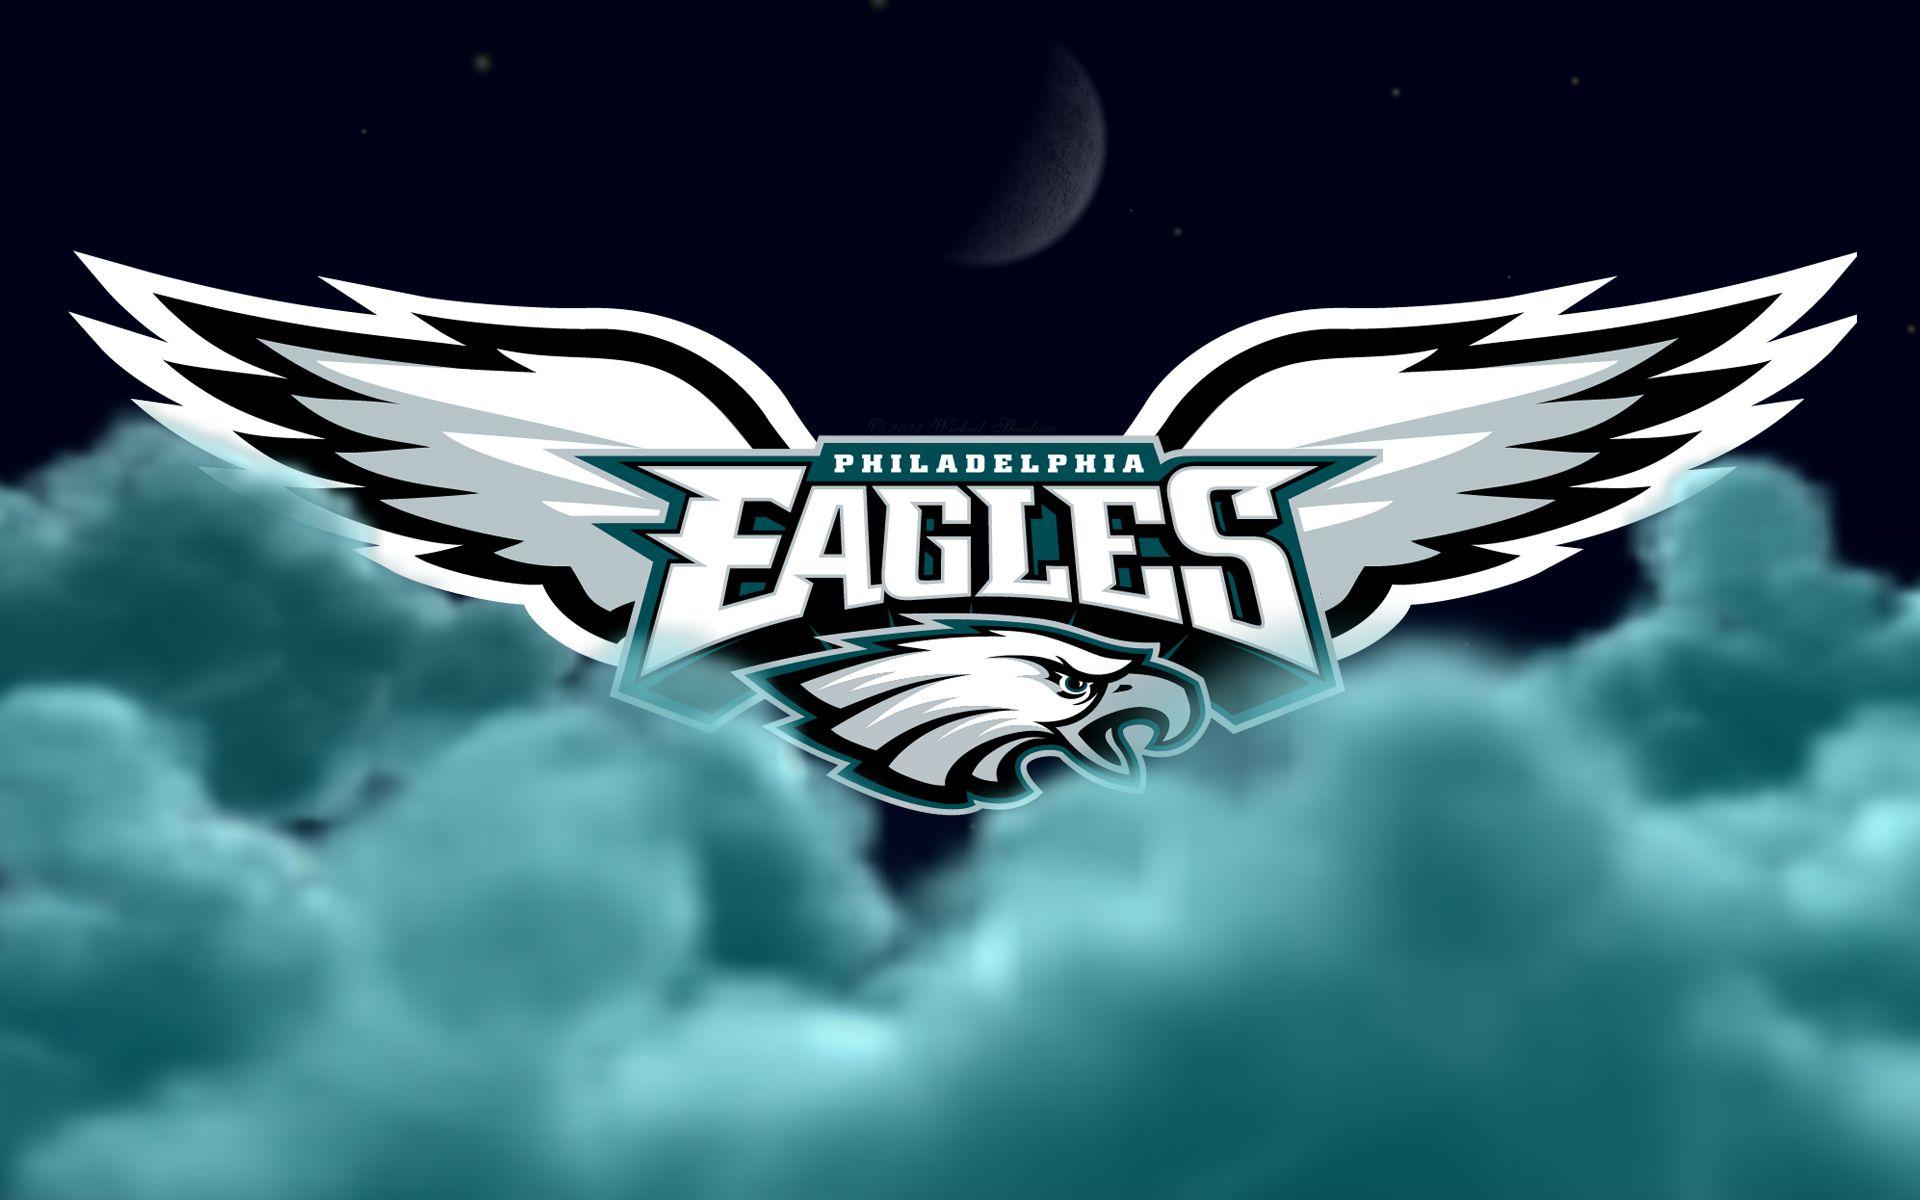 Cool Eagle Logo - Free Philadelphia Eagles Logo, Download Free Clip Art, Free Clip Art ...